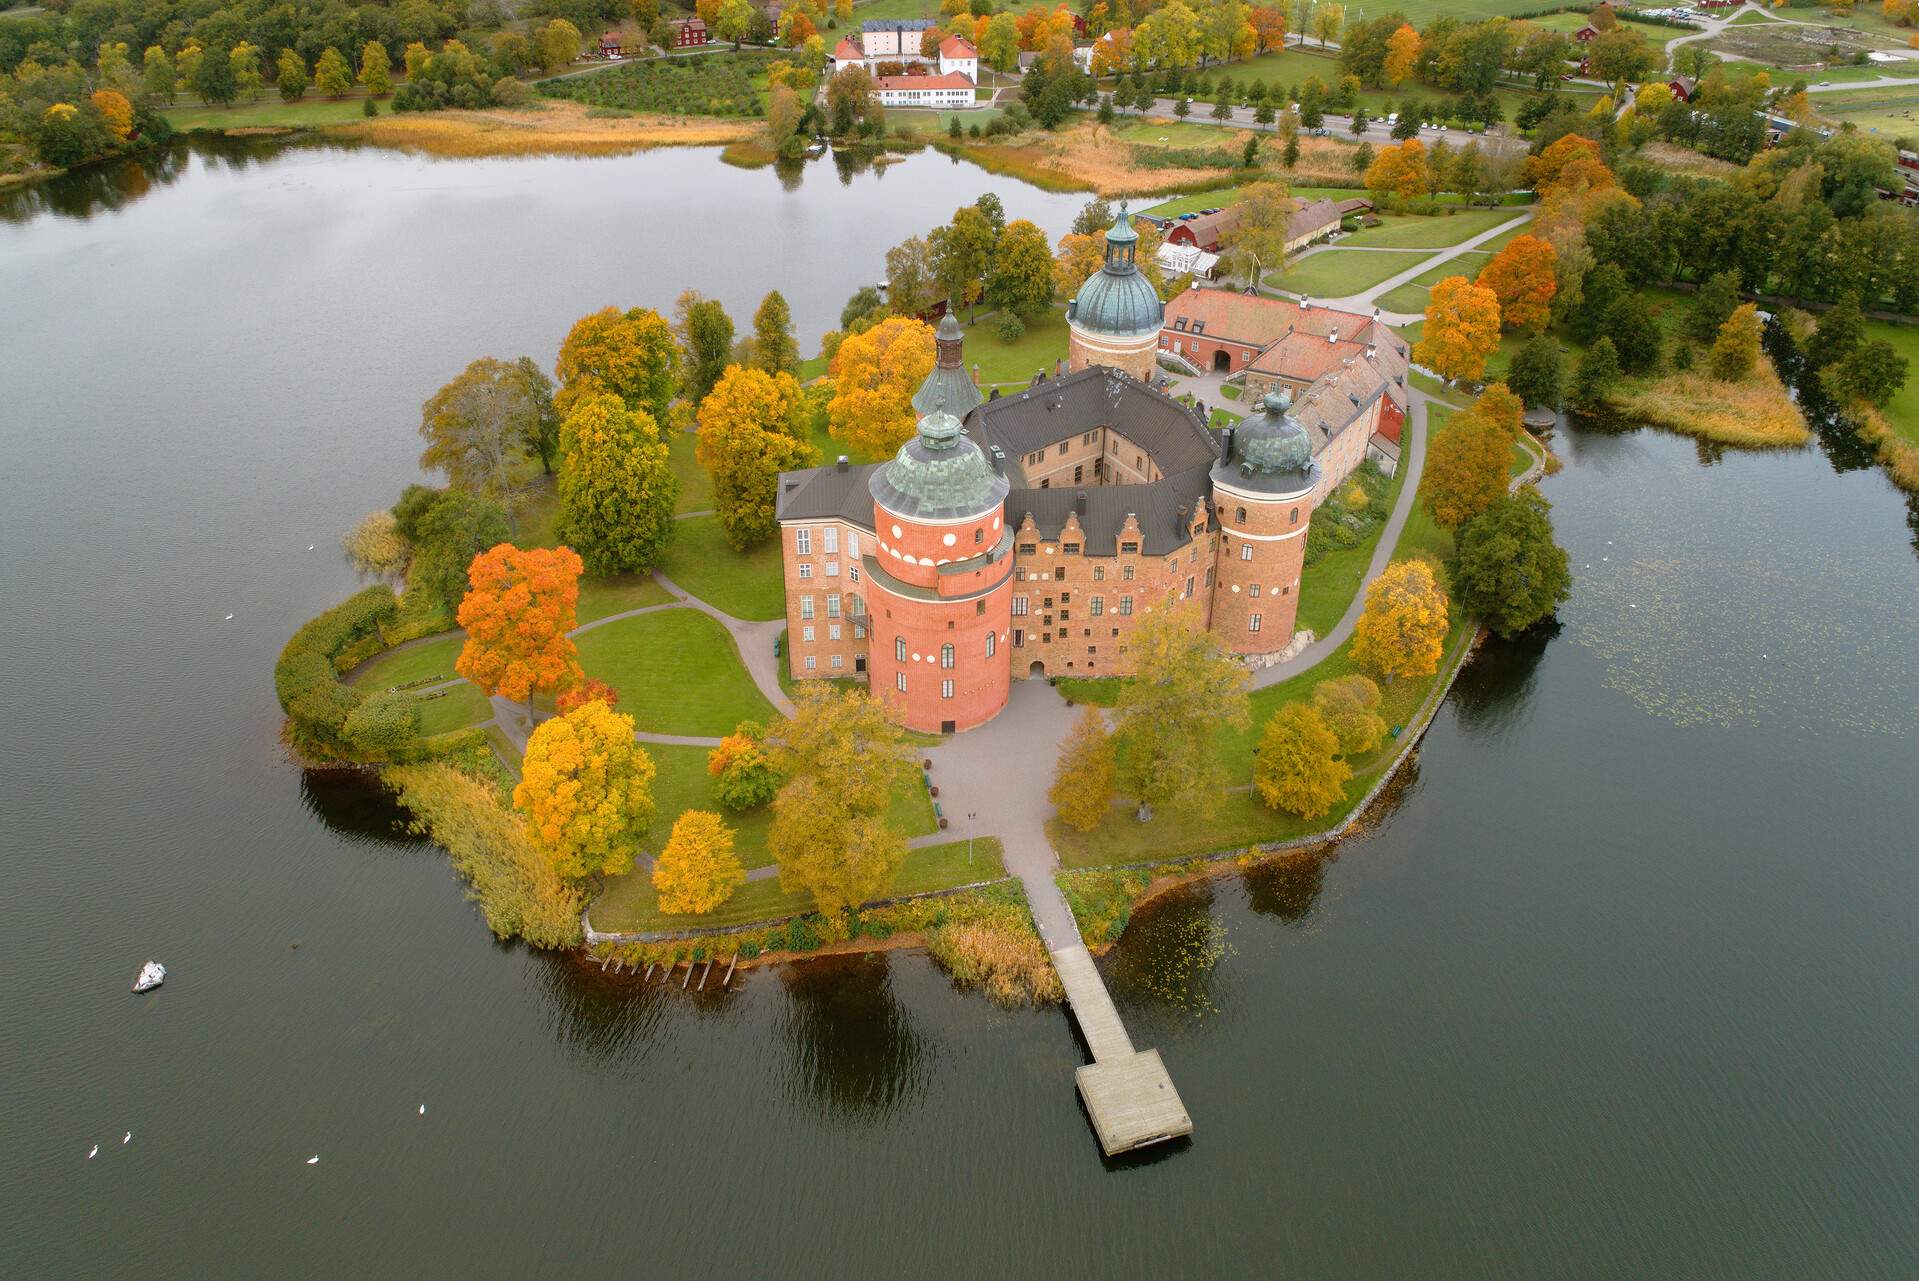 Renaissance castle near a lake, framed by vibrant fall foliage.